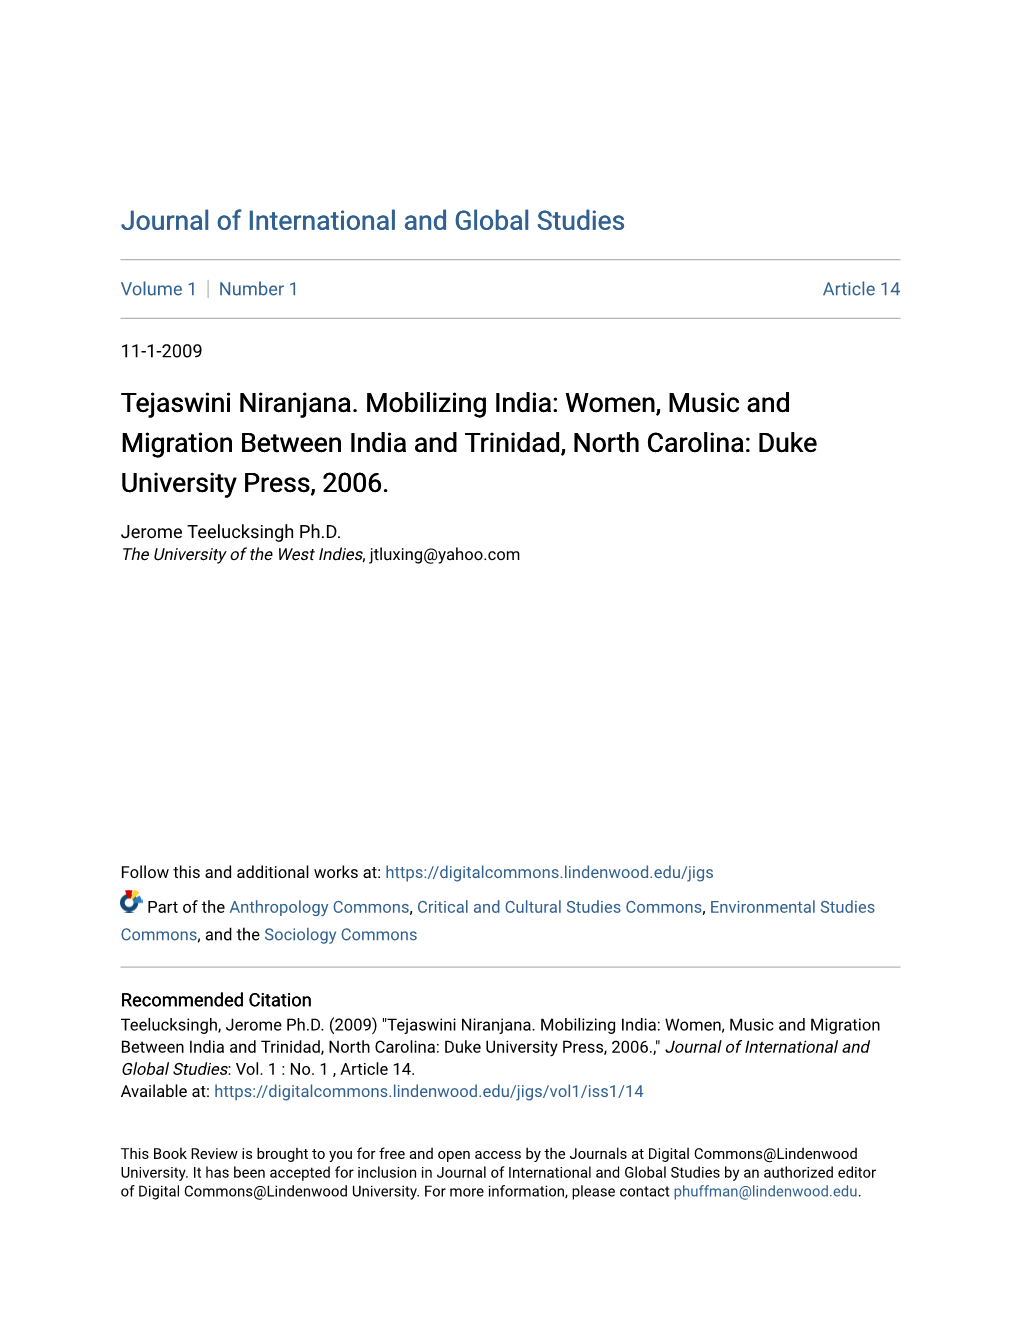 Tejaswini Niranjana. Mobilizing India: Women, Music and Migration Between India and Trinidad, North Carolina: Duke University Press, 2006